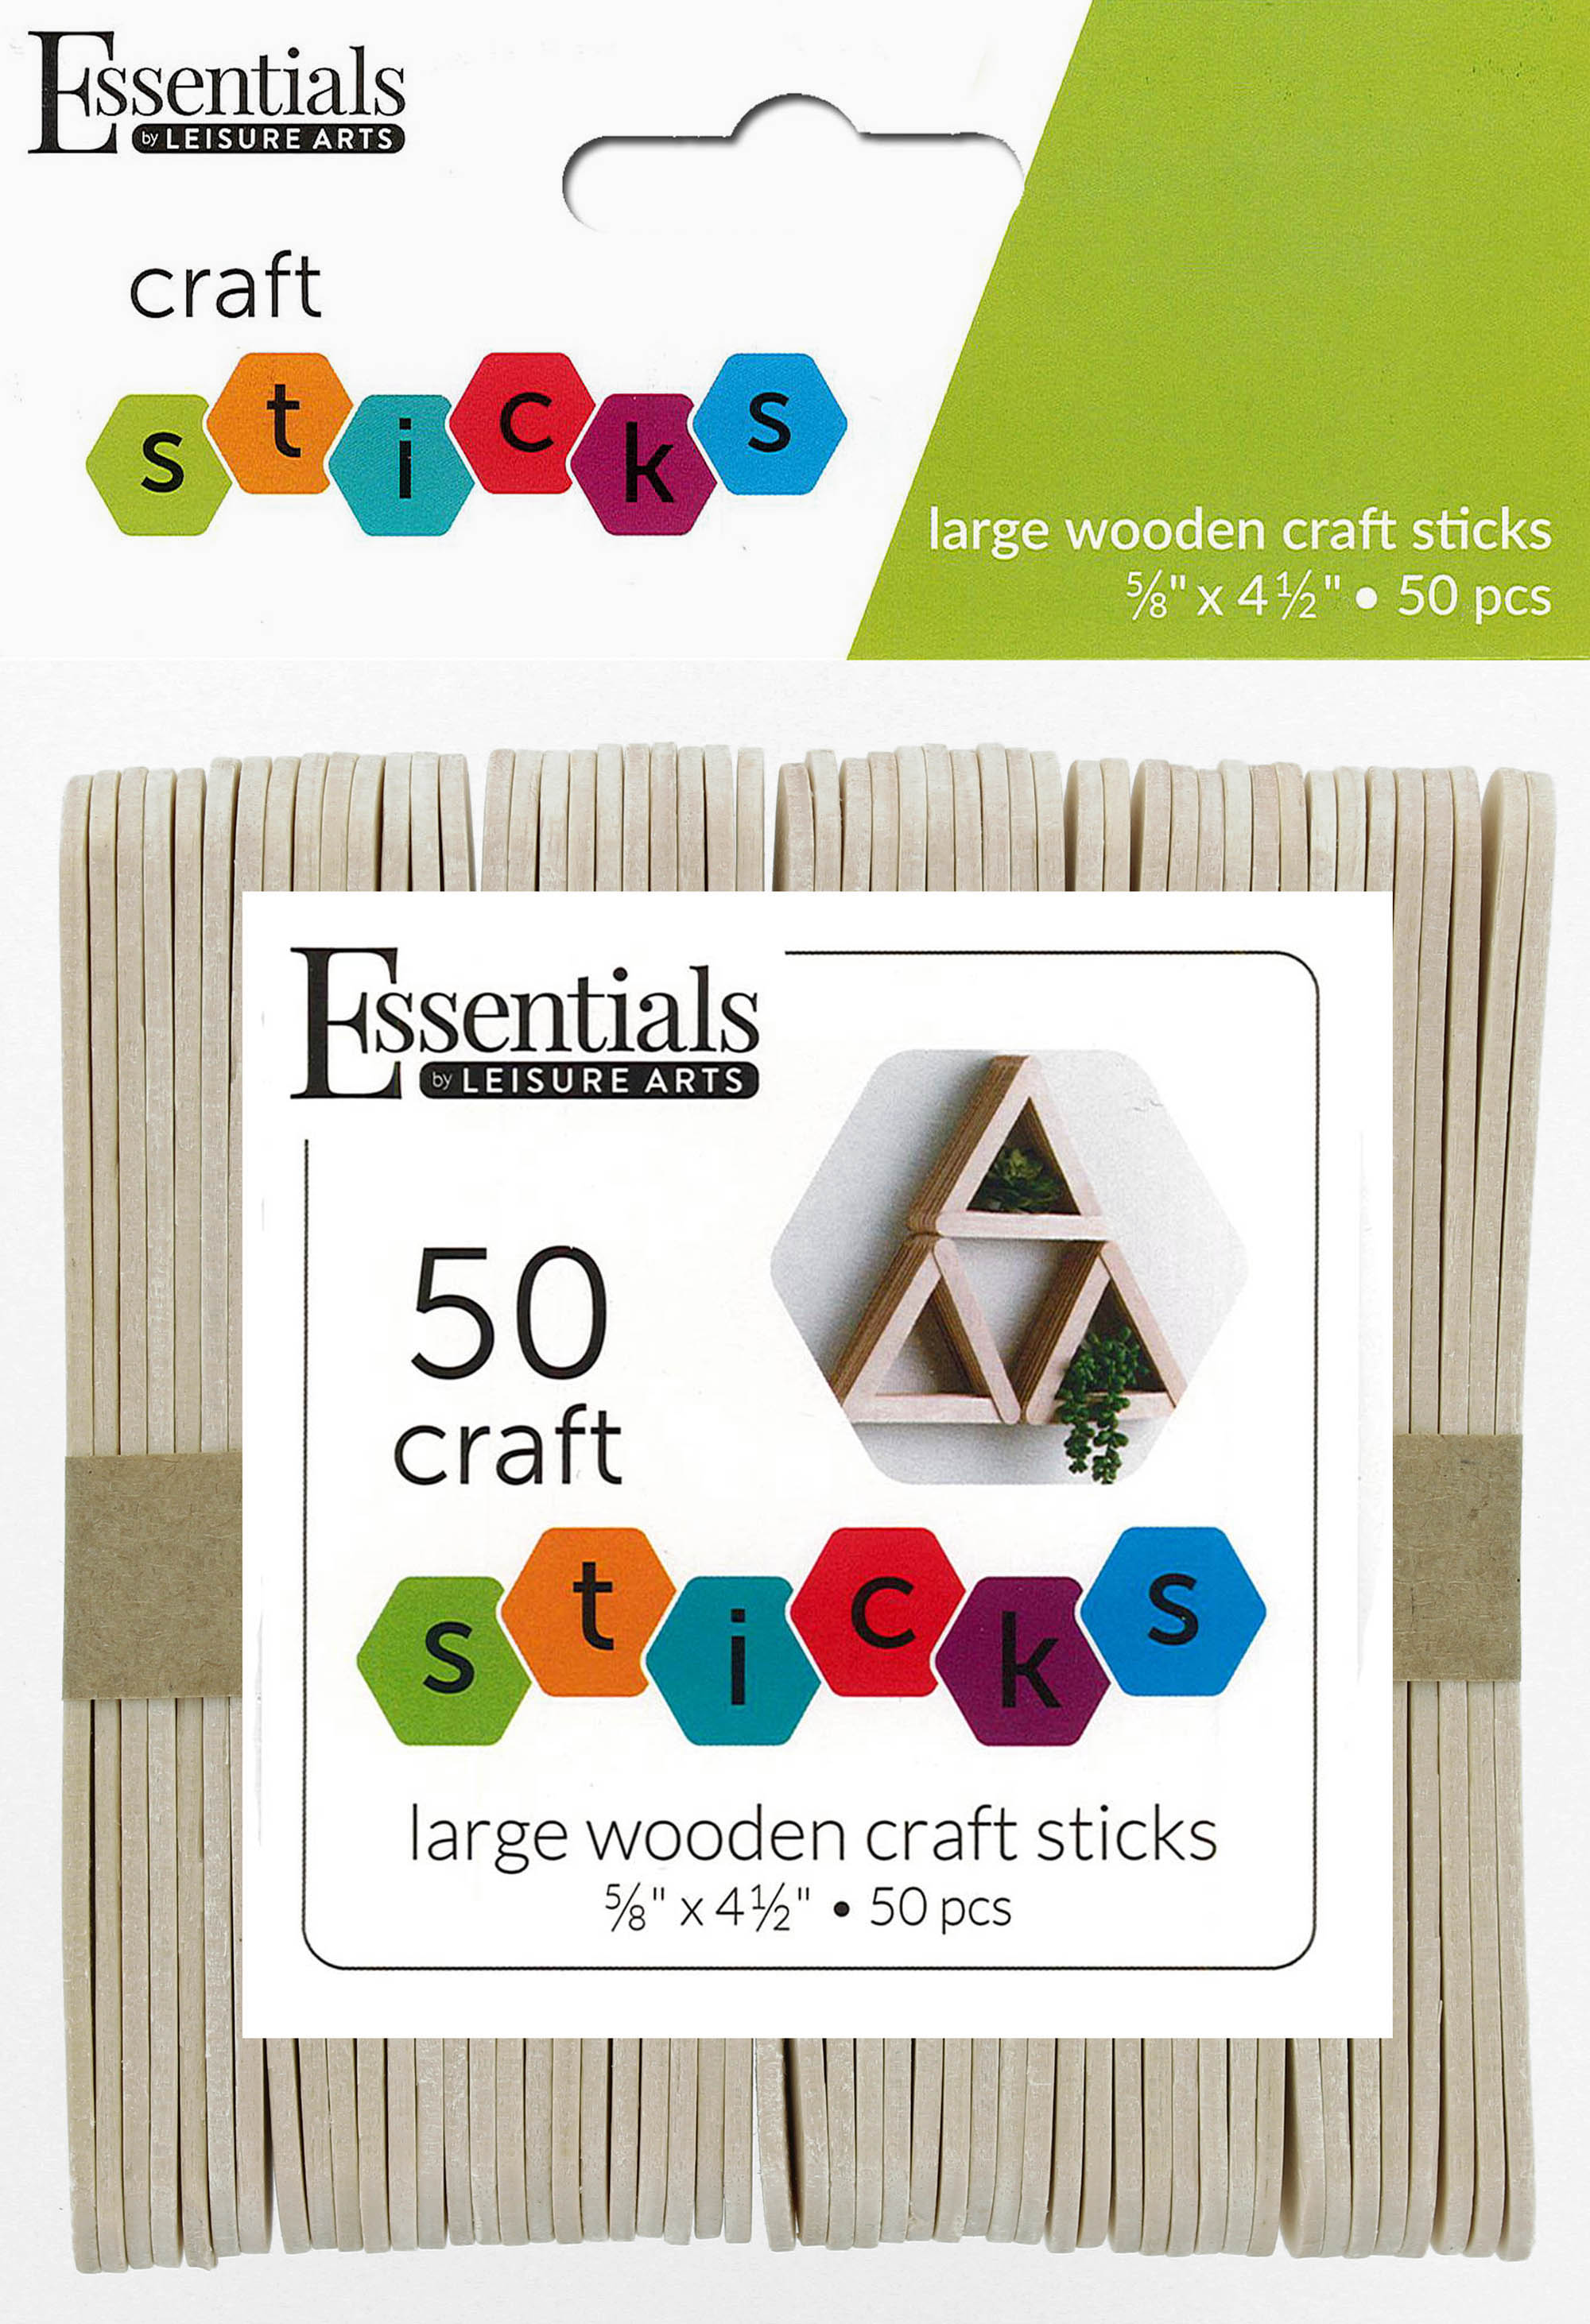 Essentials By Leisure Arts Wood Craft Sticks Large .63x 4.5 50pc